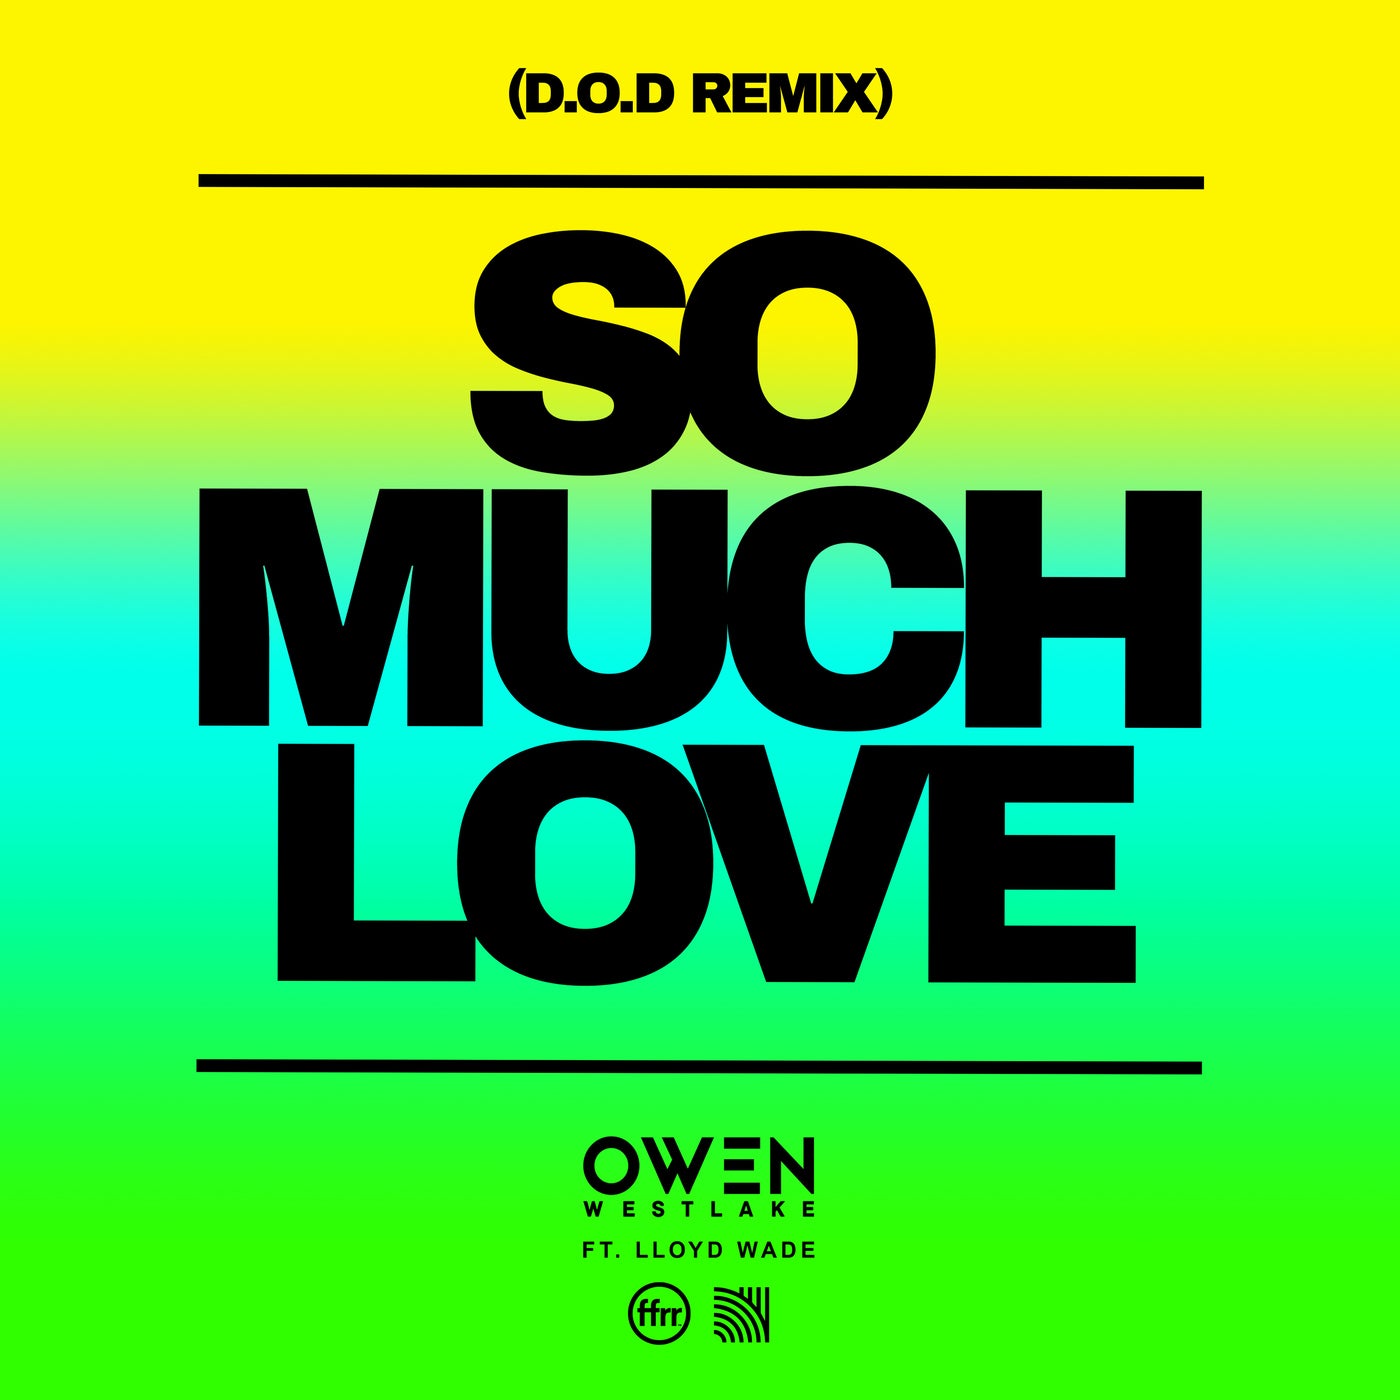 Owen Westlake - So Much Love (feat. Lloyd Wade) [D.O.D Extended Remix] [190296650680]